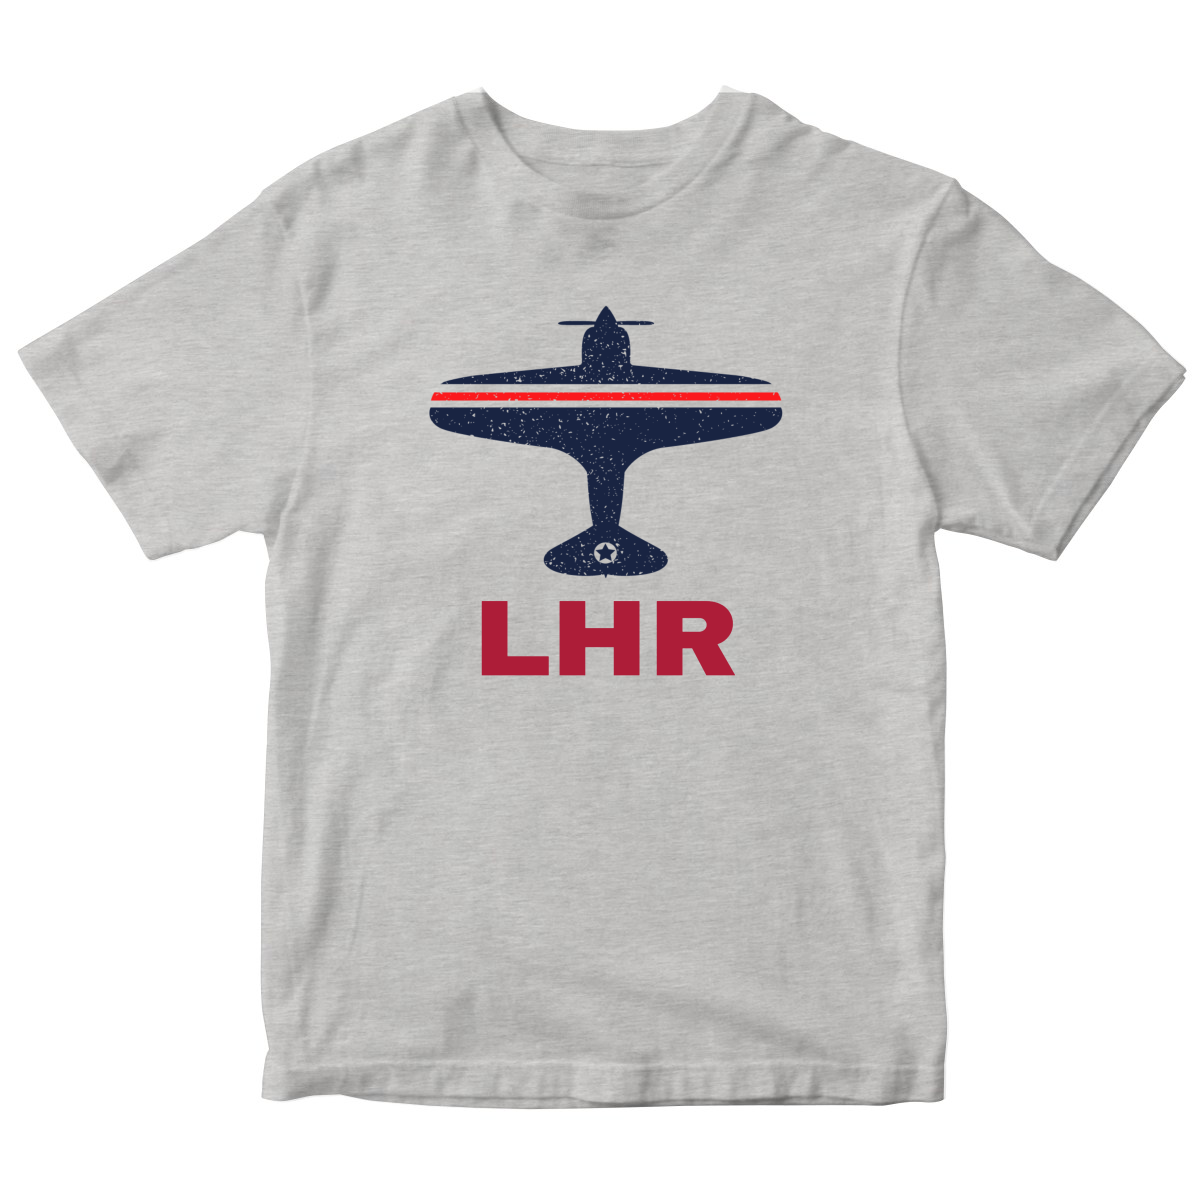 Fly London LHR Airport Kids T-shirt | Gray